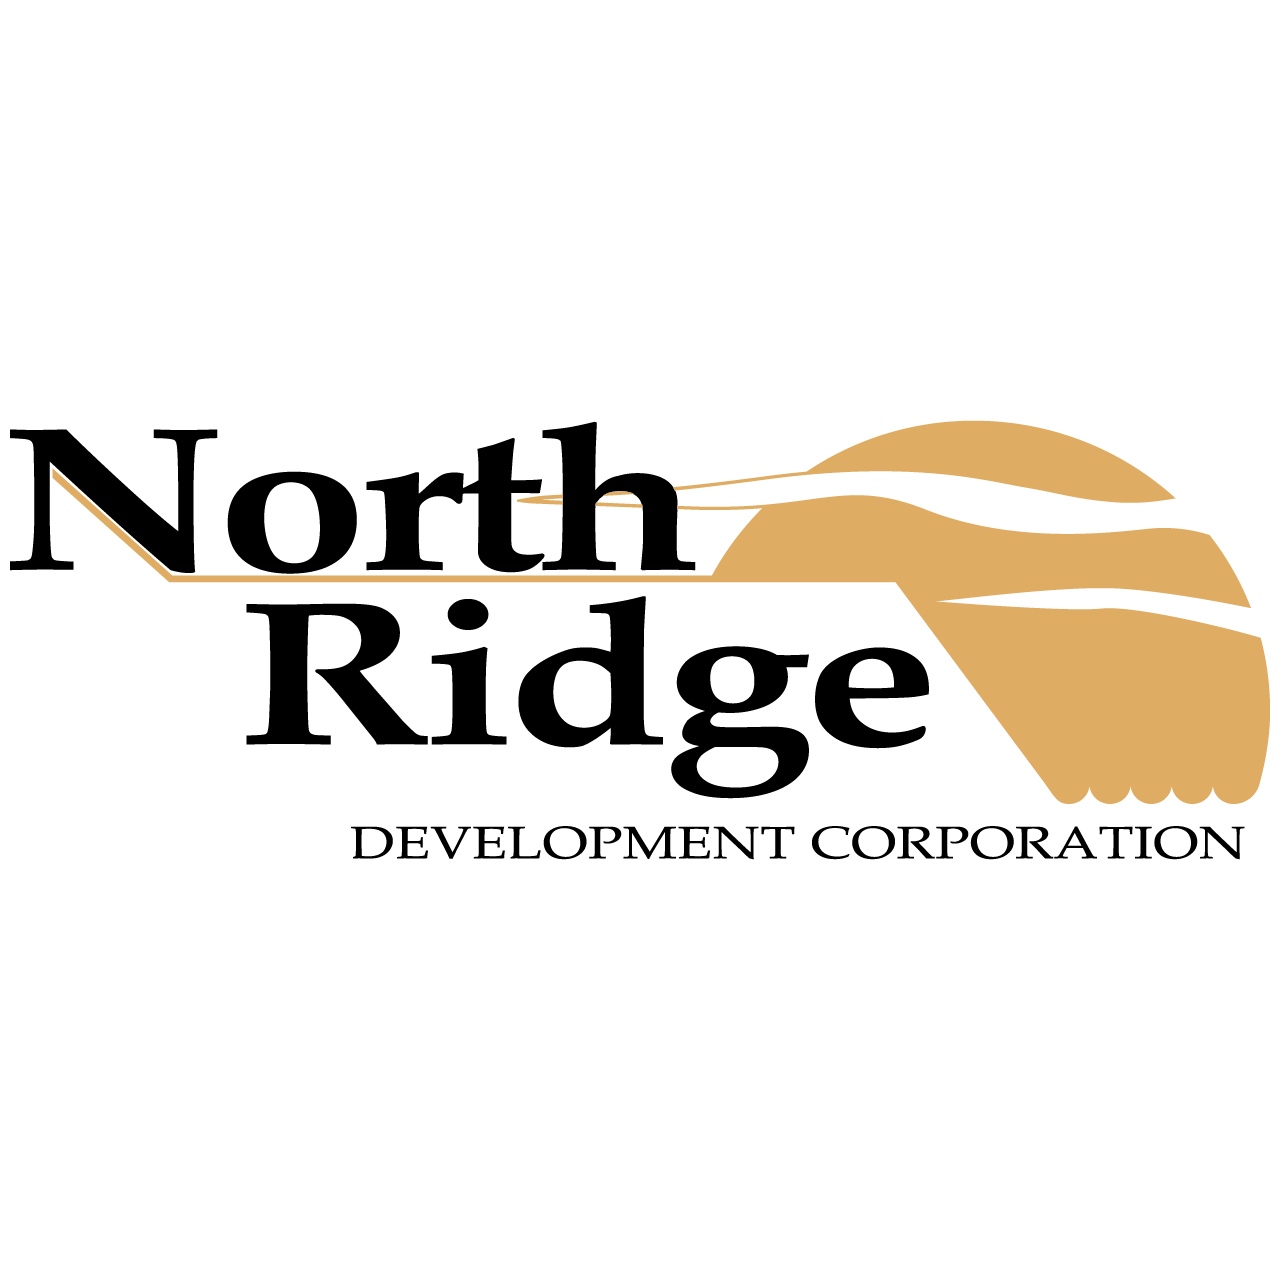 Northridge logo